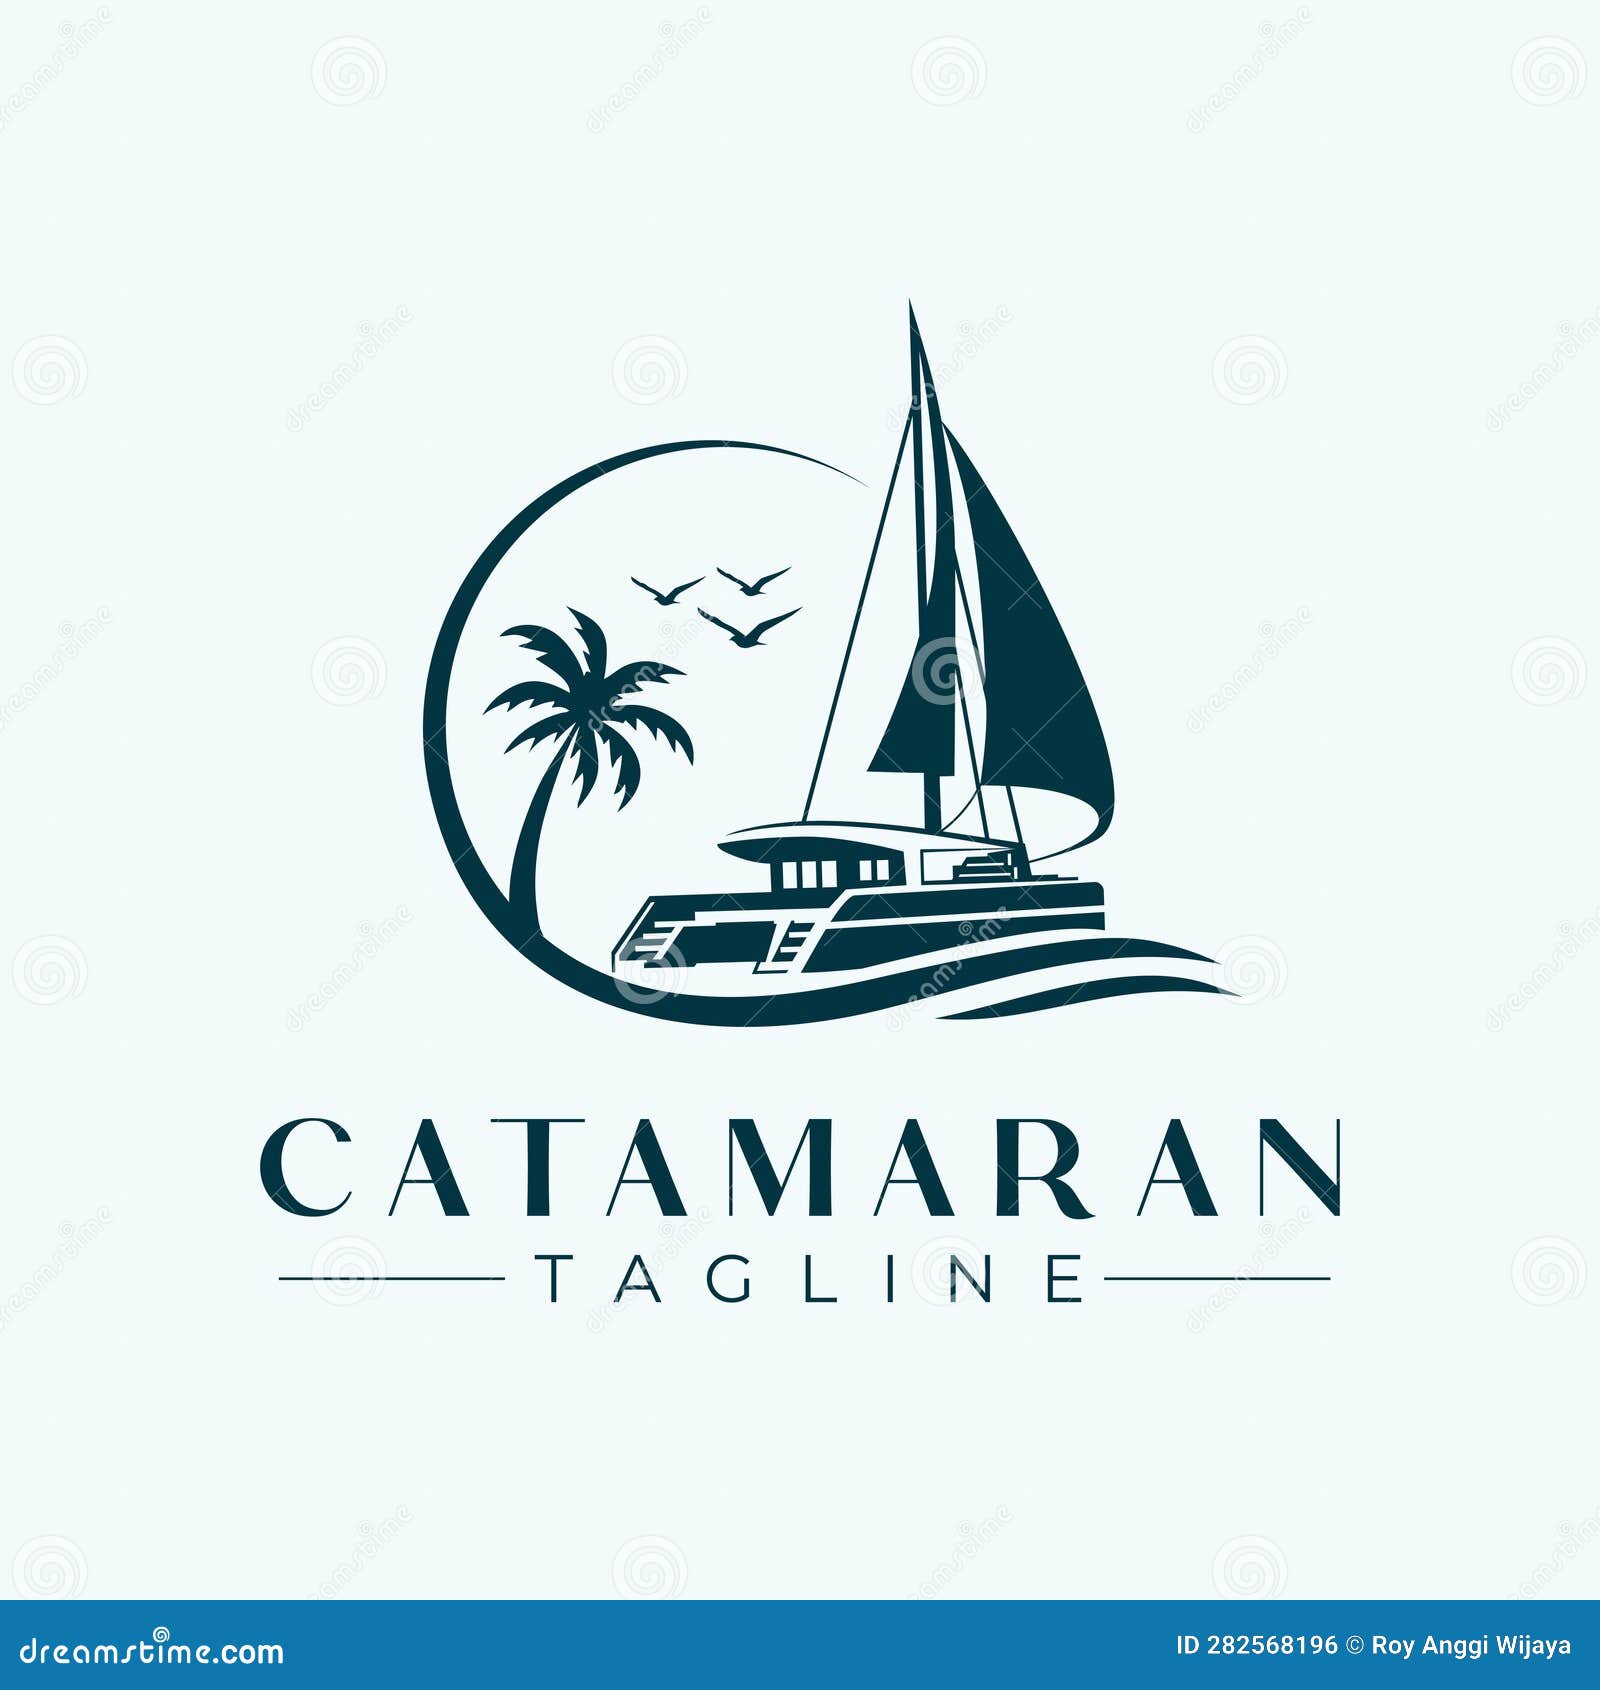 catamaran logo design